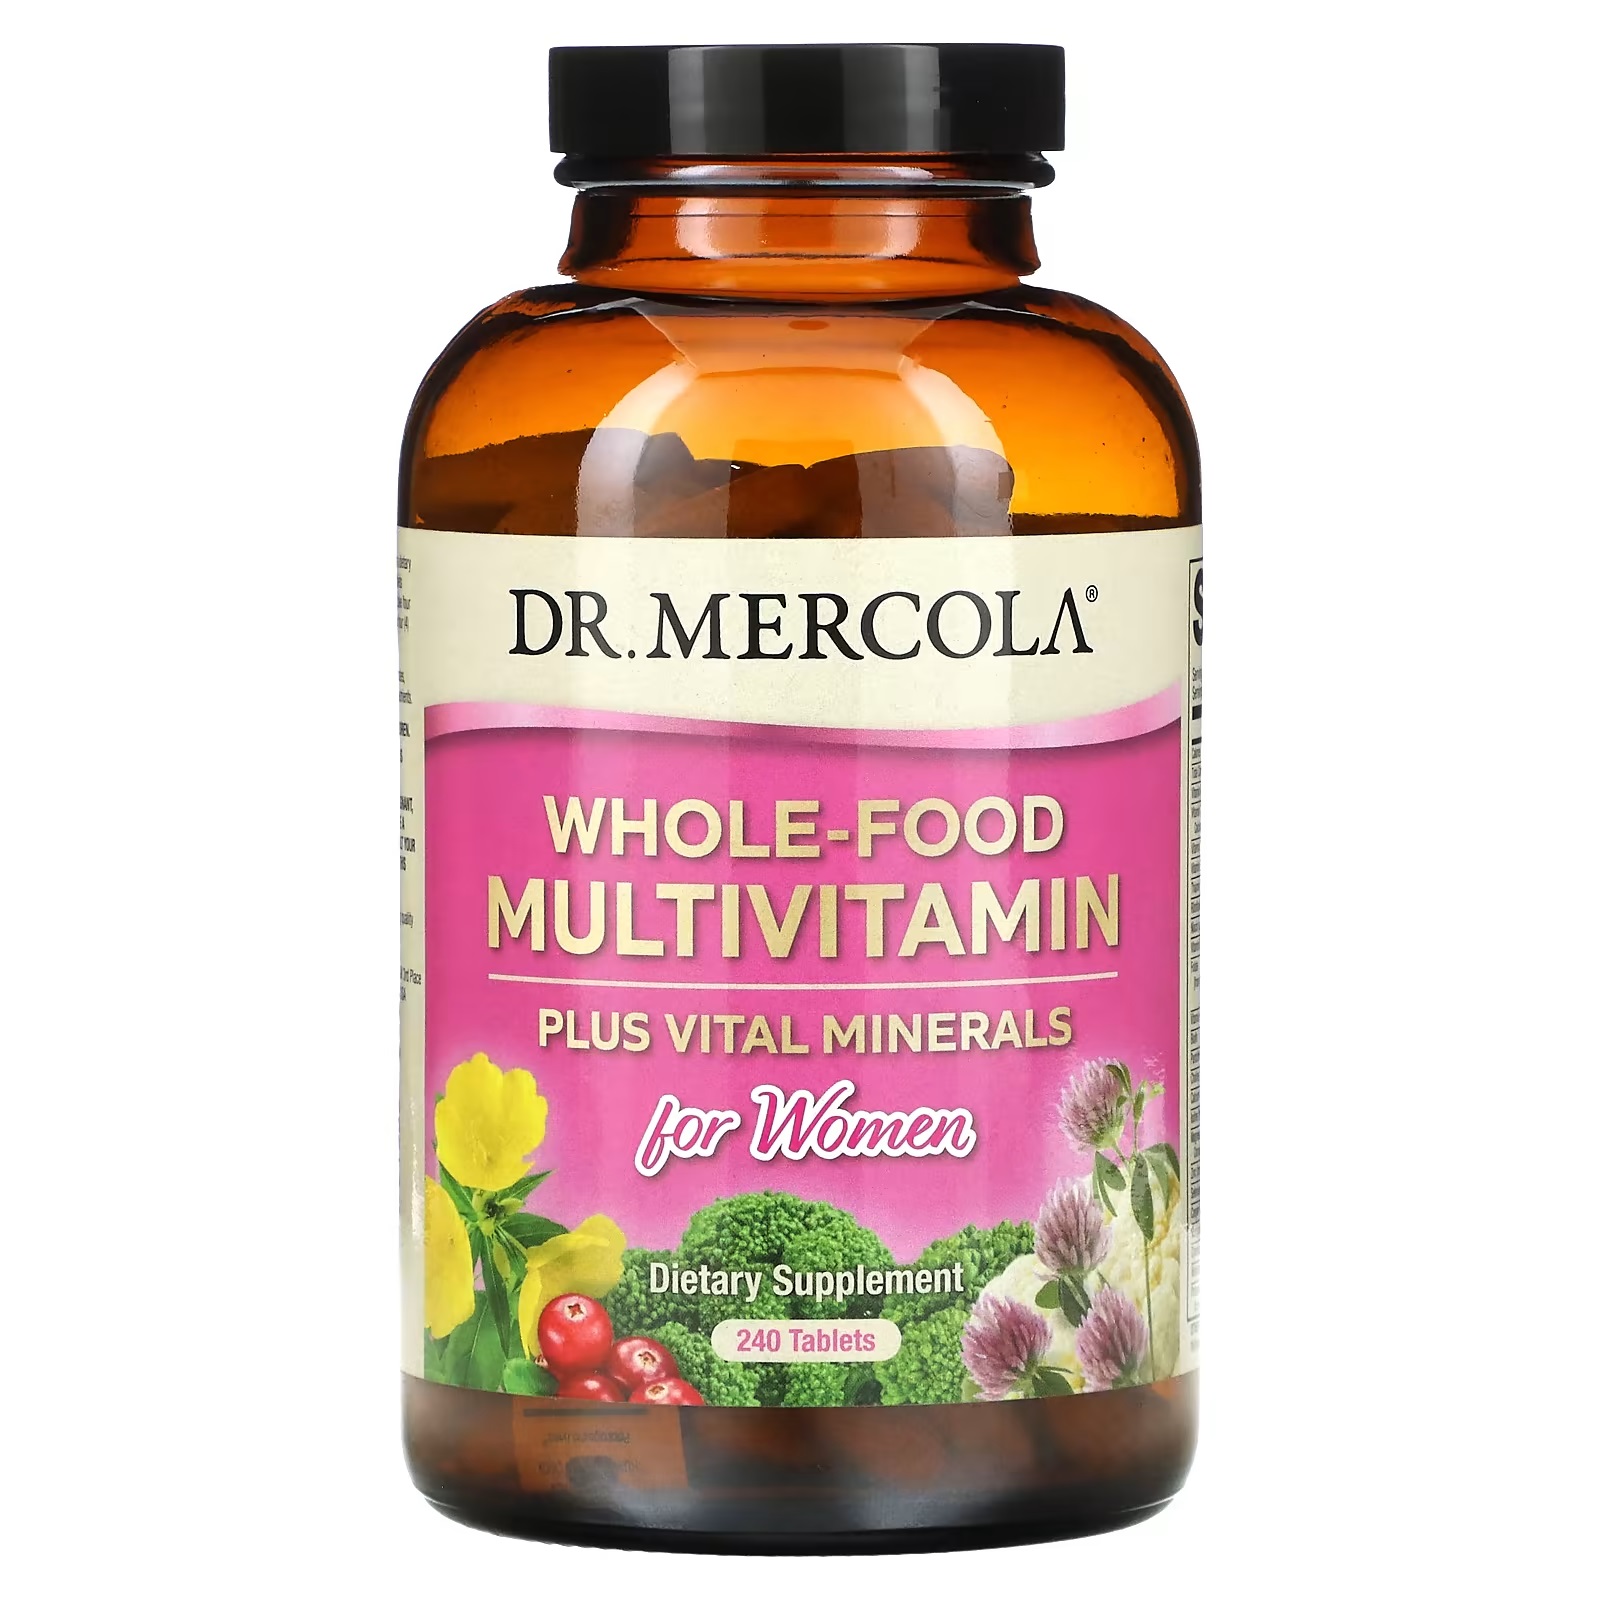 Dr. Mercola, Whole-Food Multivitamin Plus Vital Minerals for Women